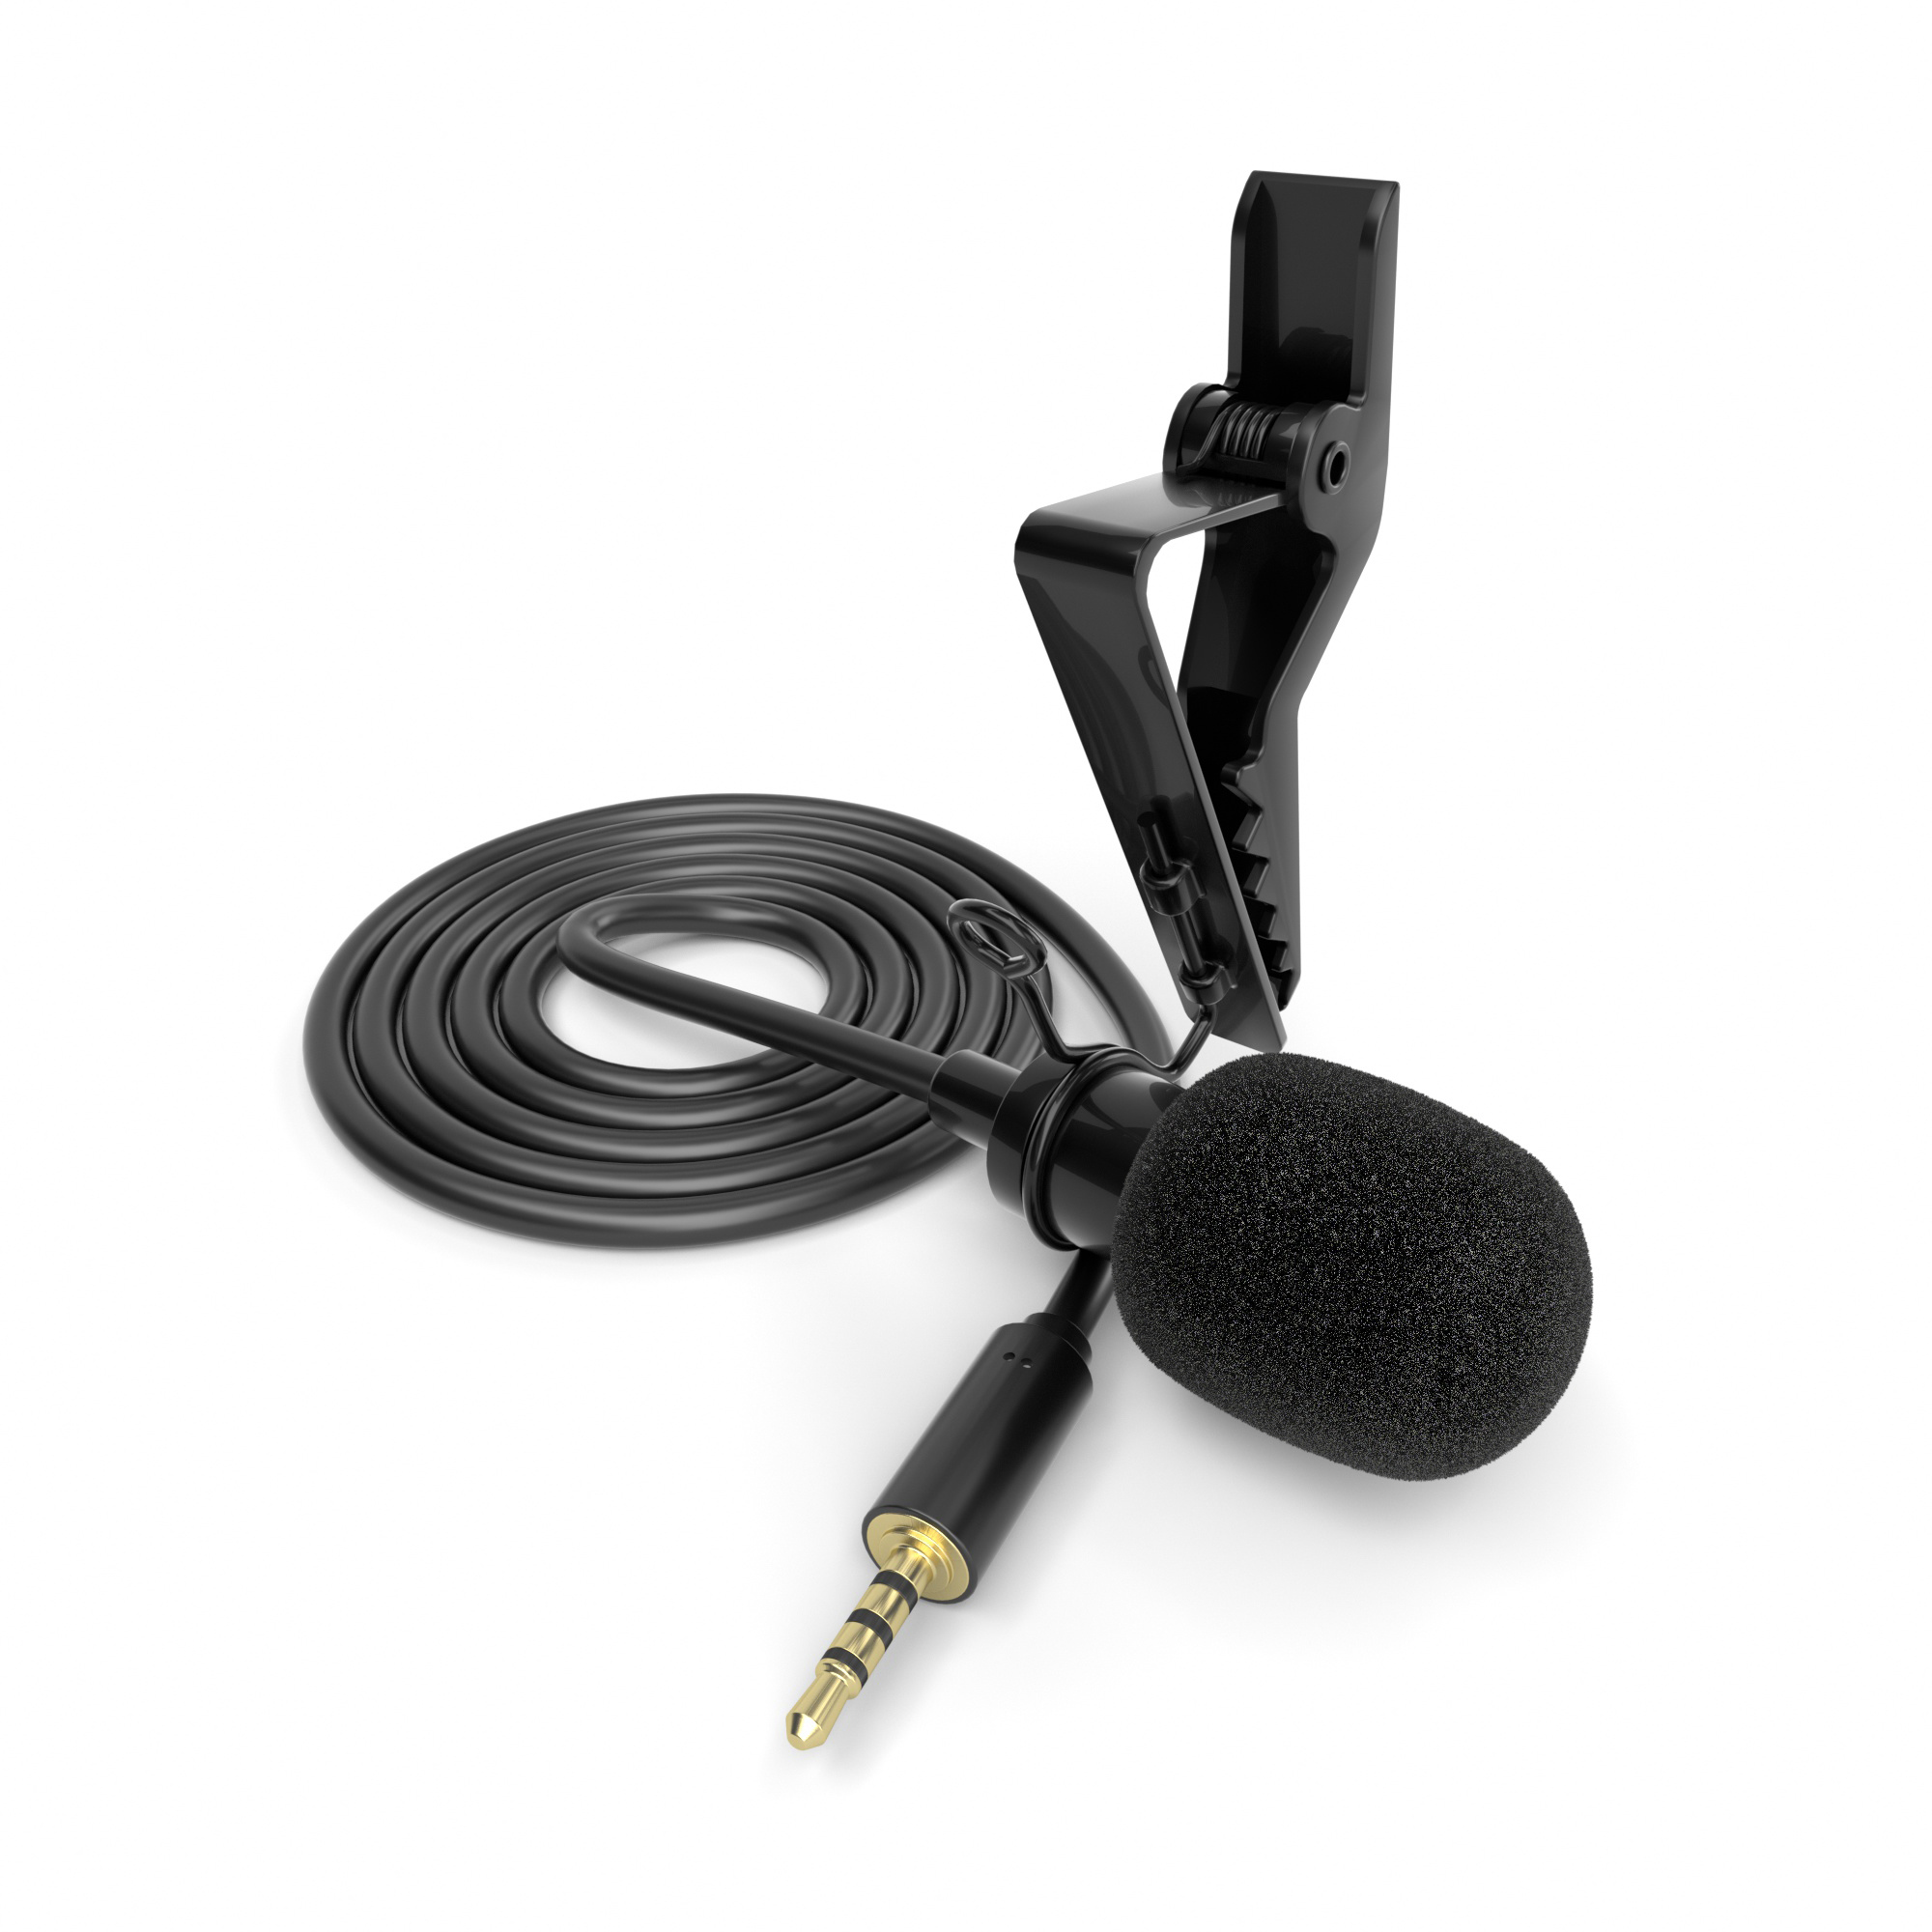 ayex Lavalier-Mikrofon perfekt für Smartphones - z.B. für Interviews, Livestreams u.v.m. geeignet - LV-1 3,5mm for Smartphone